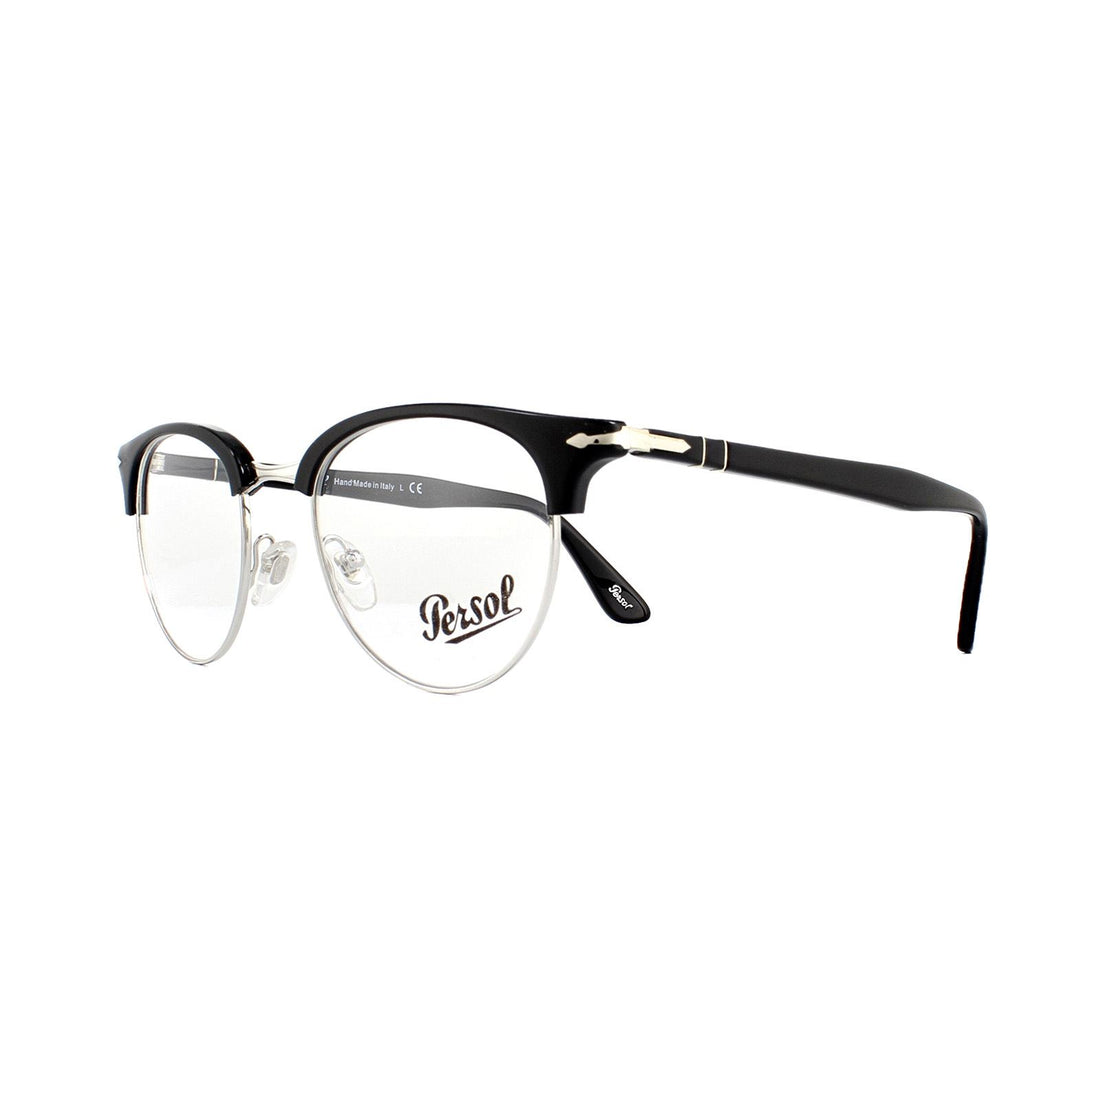 Persol PO 8129V Glasses Frames